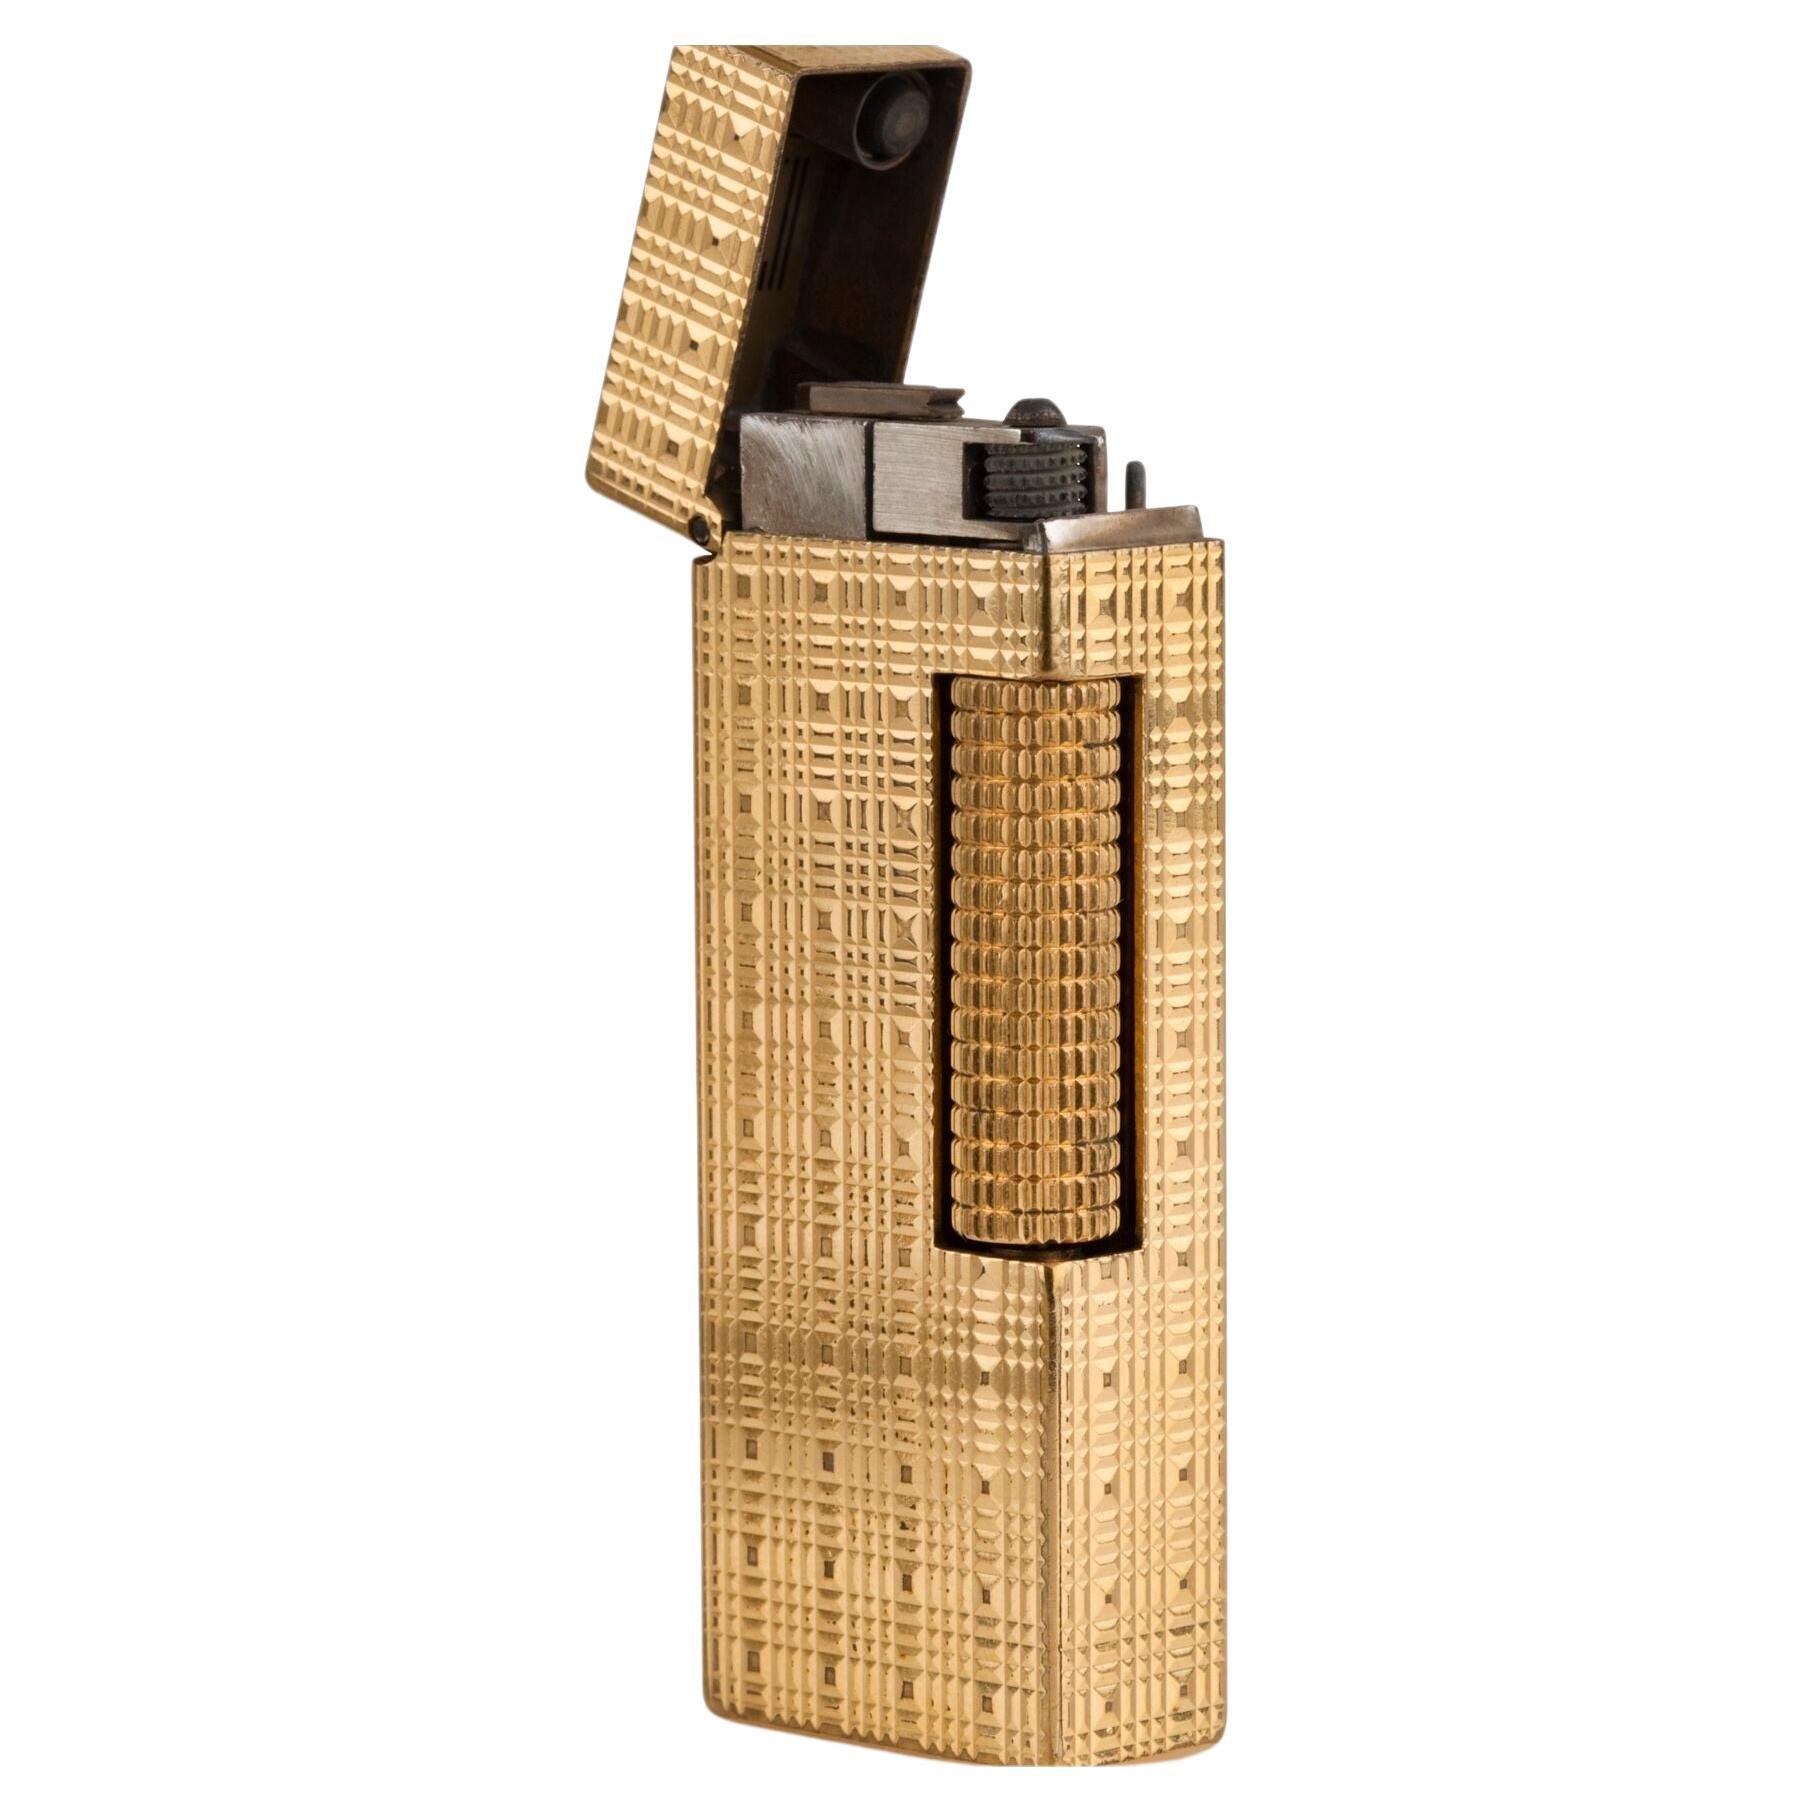 The Original James Bond  Dunhill Gold-Plated Cigarette Lighter